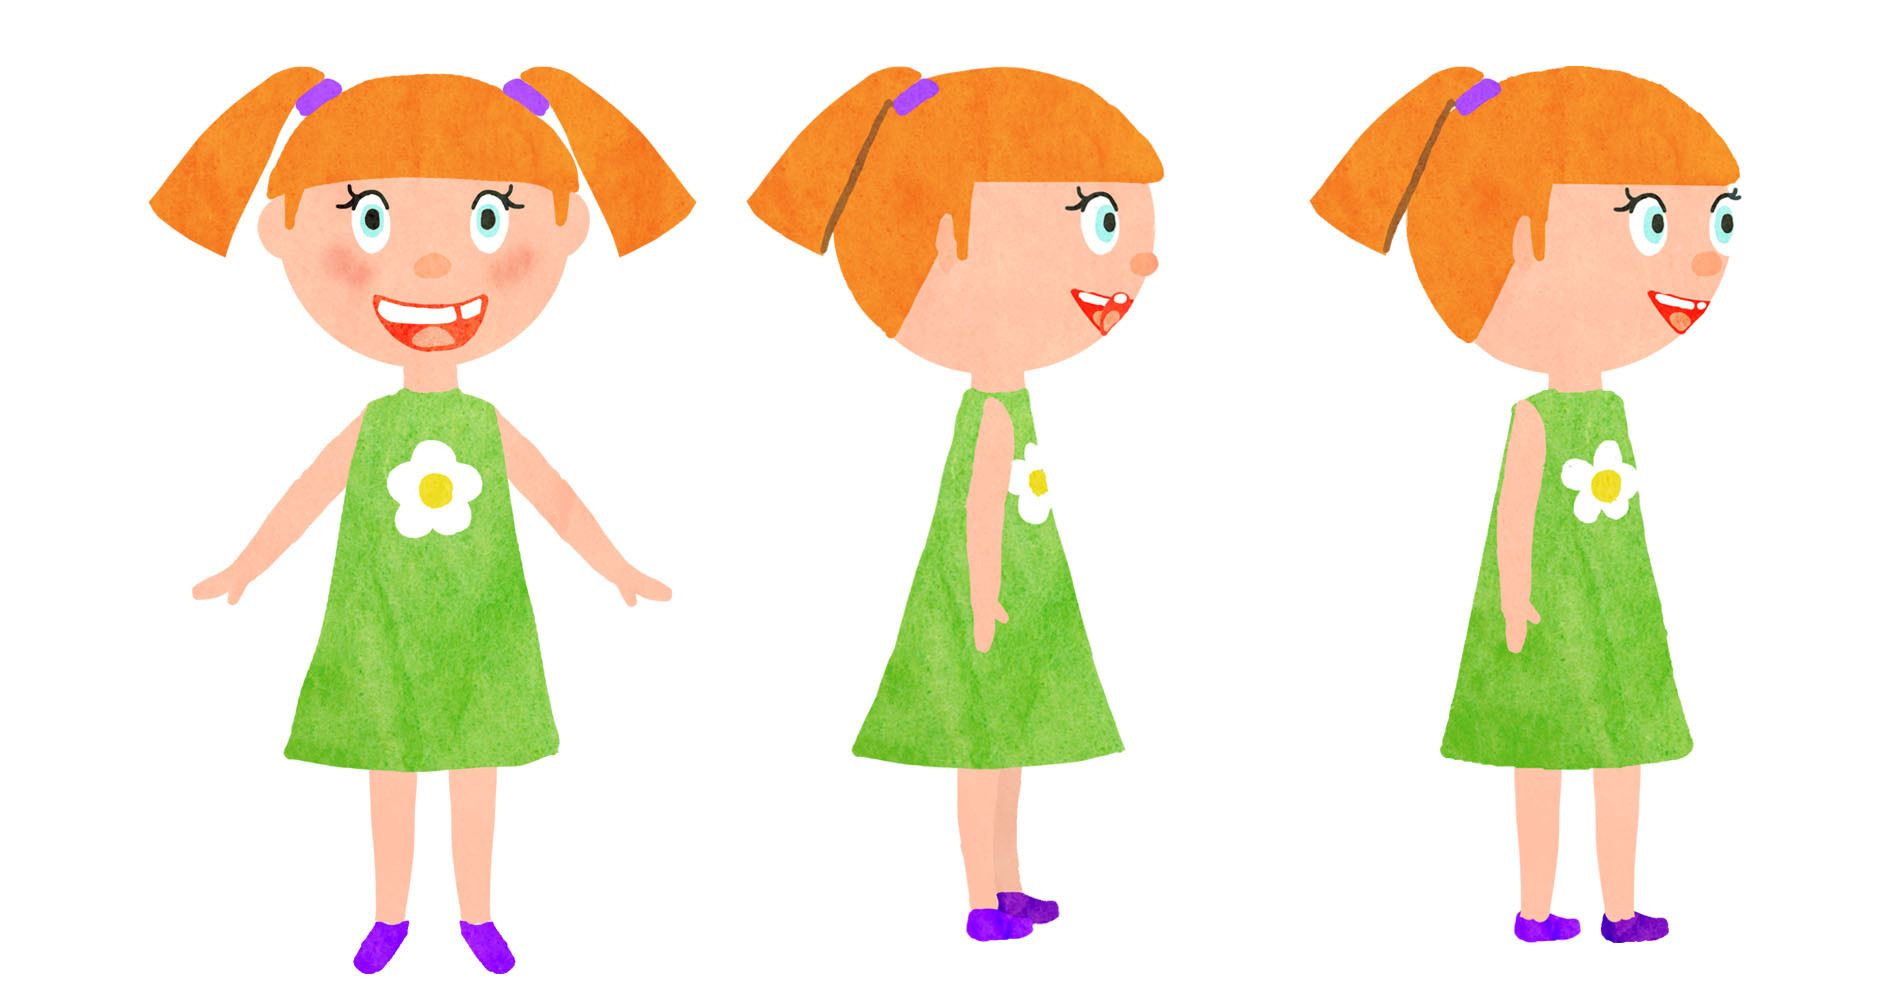 ArtStation - 2D Animation: Susie's Wish - characters